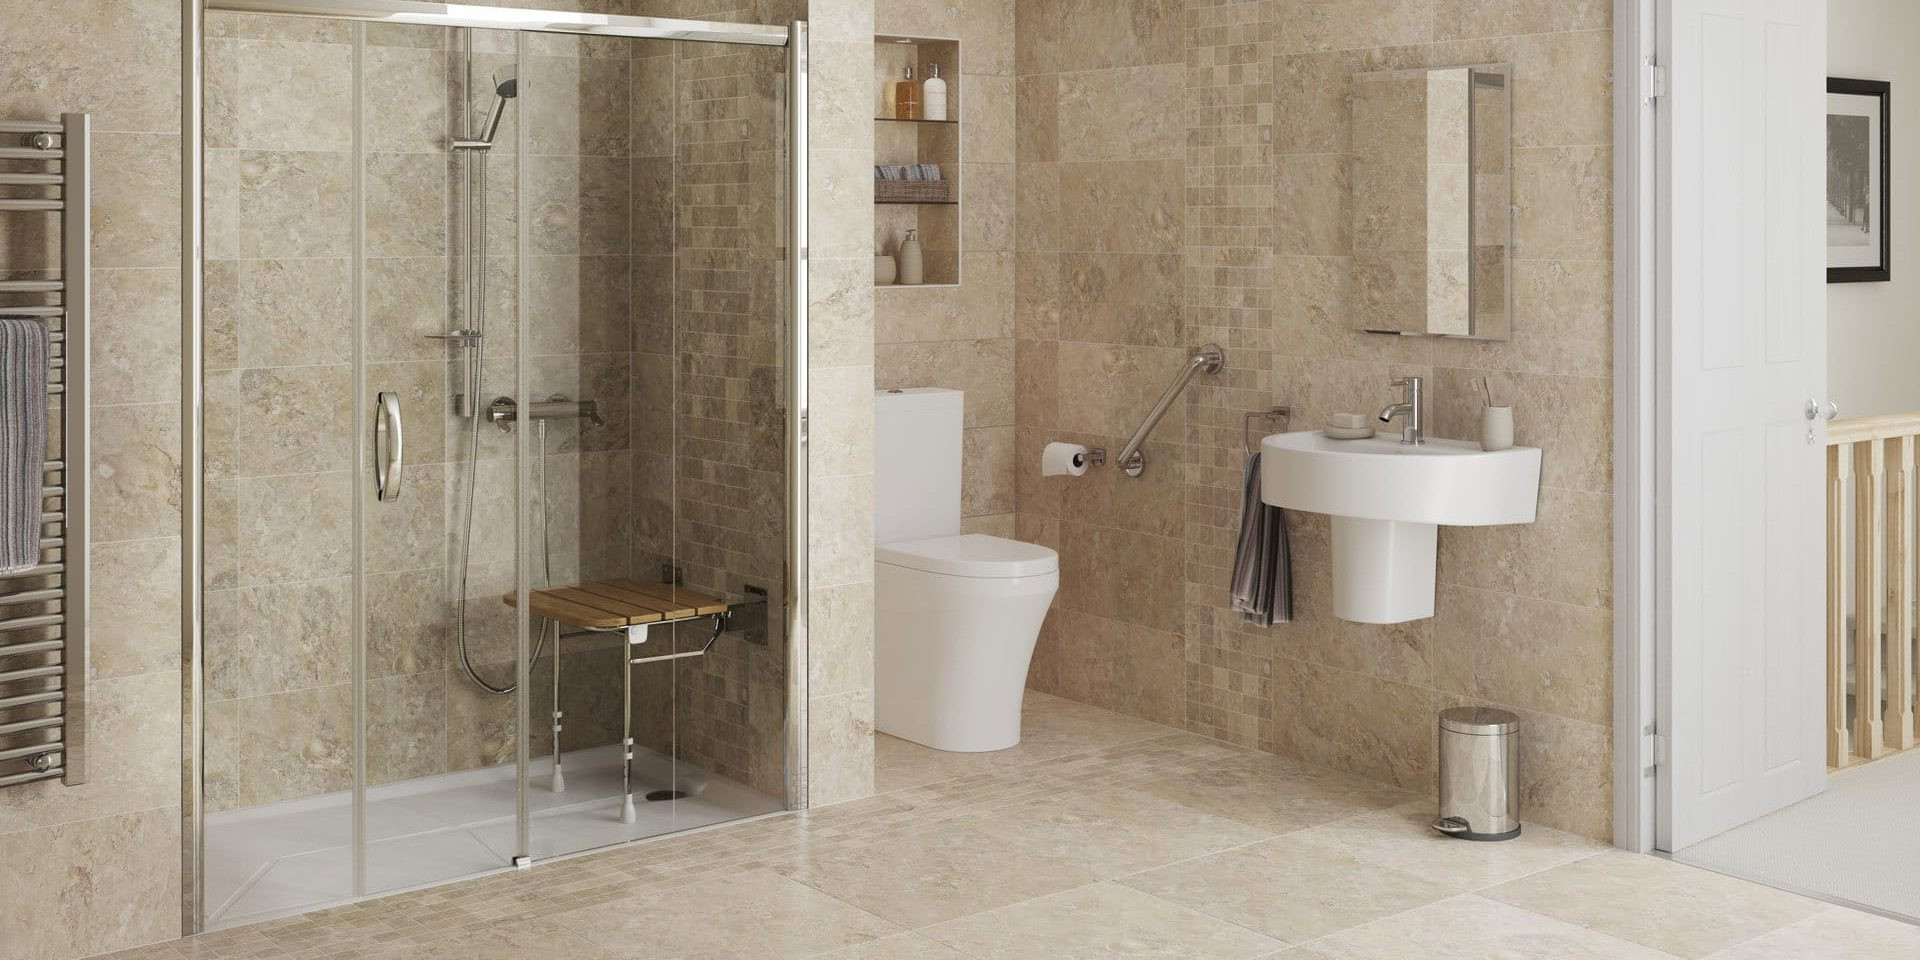 Handicap Bathroom Designs Pictures
 An Essential Guide to a Handicap Bathroom Remodel